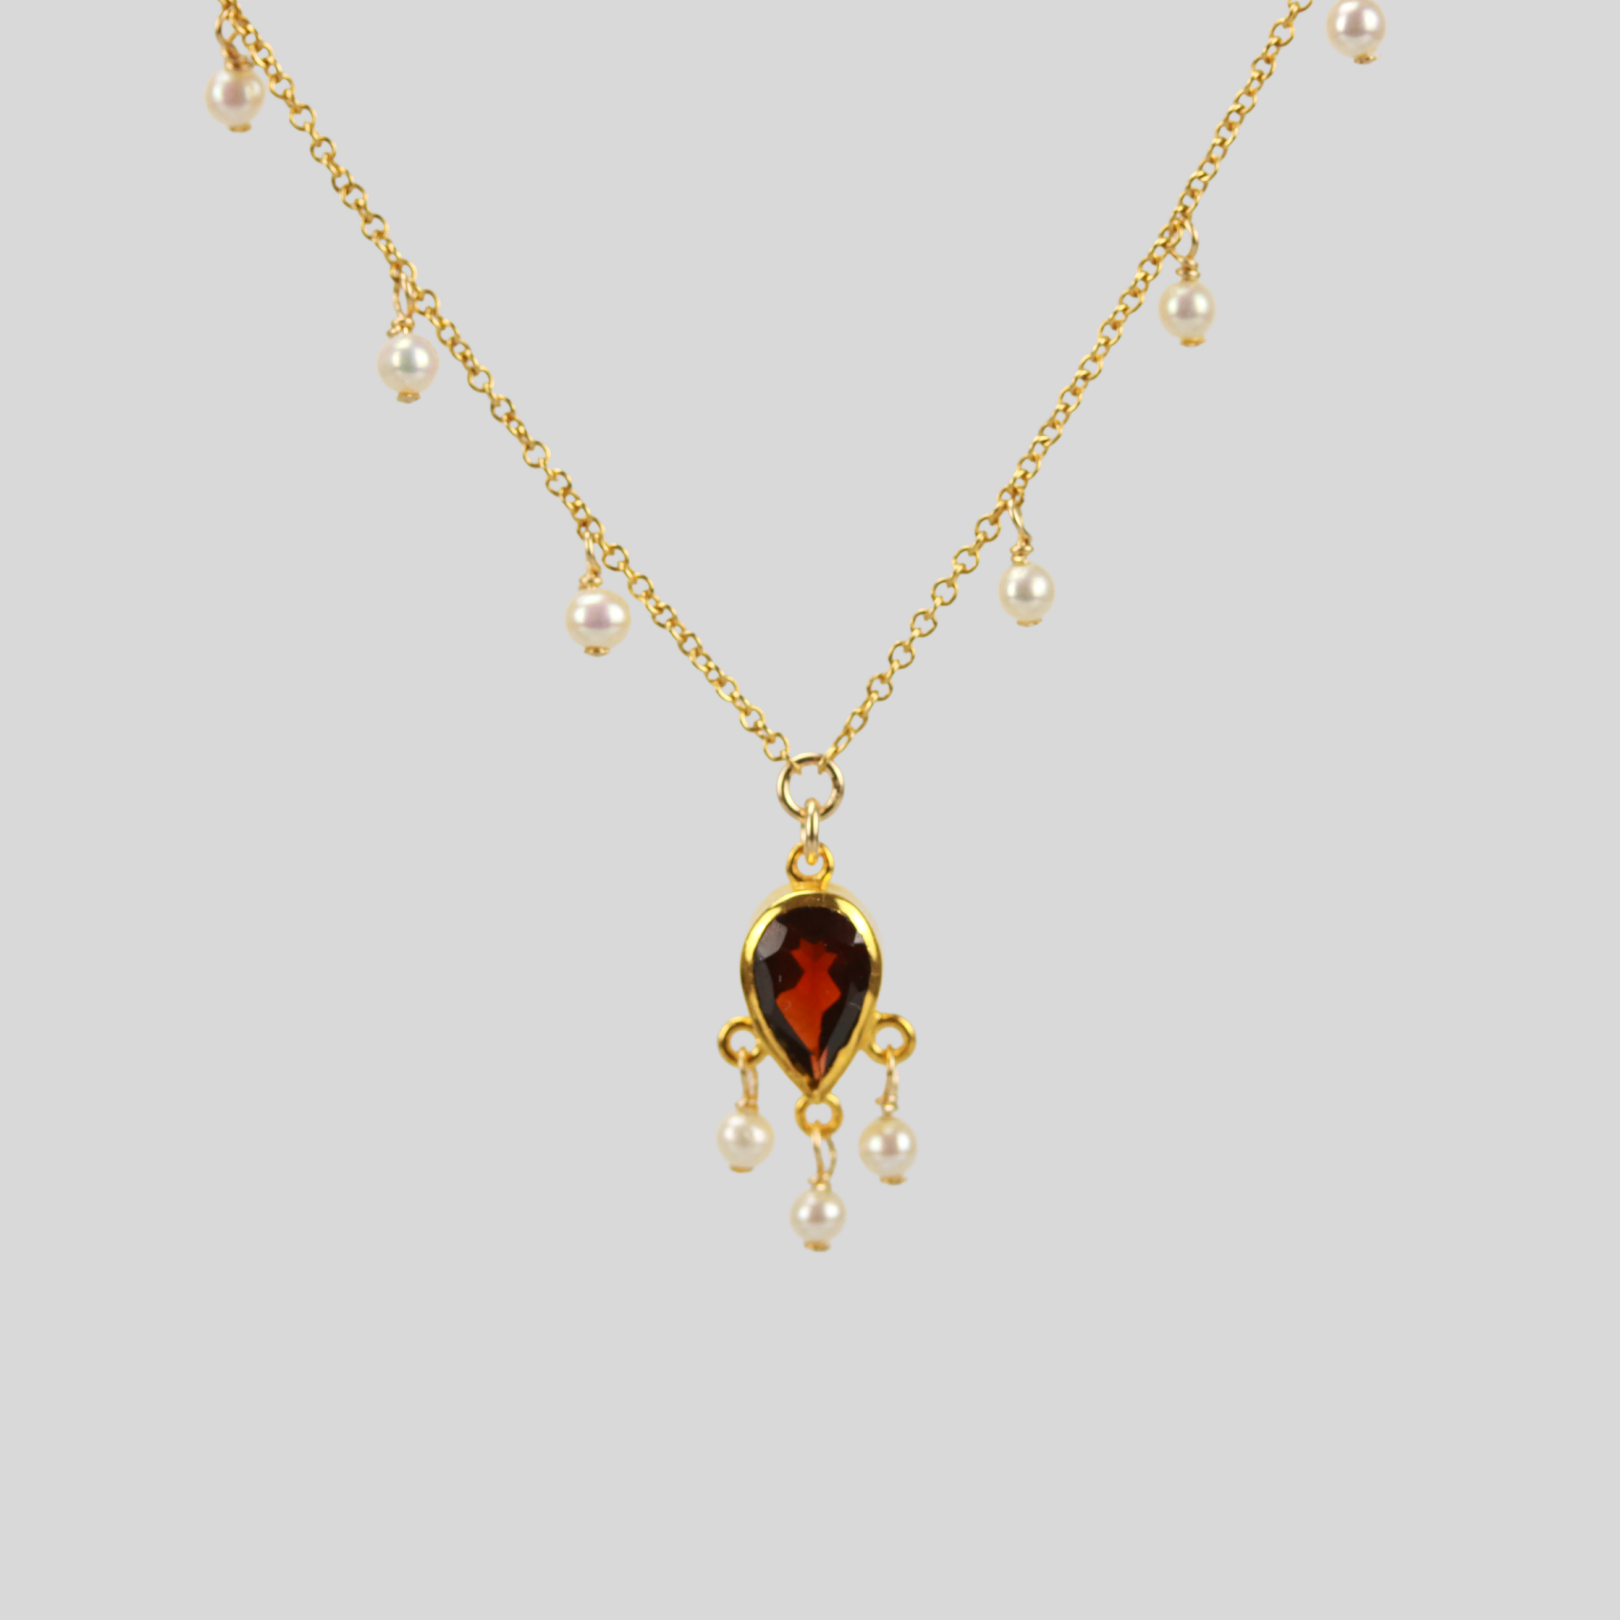 Garnet Teardrop Necklace with Seed Pearls